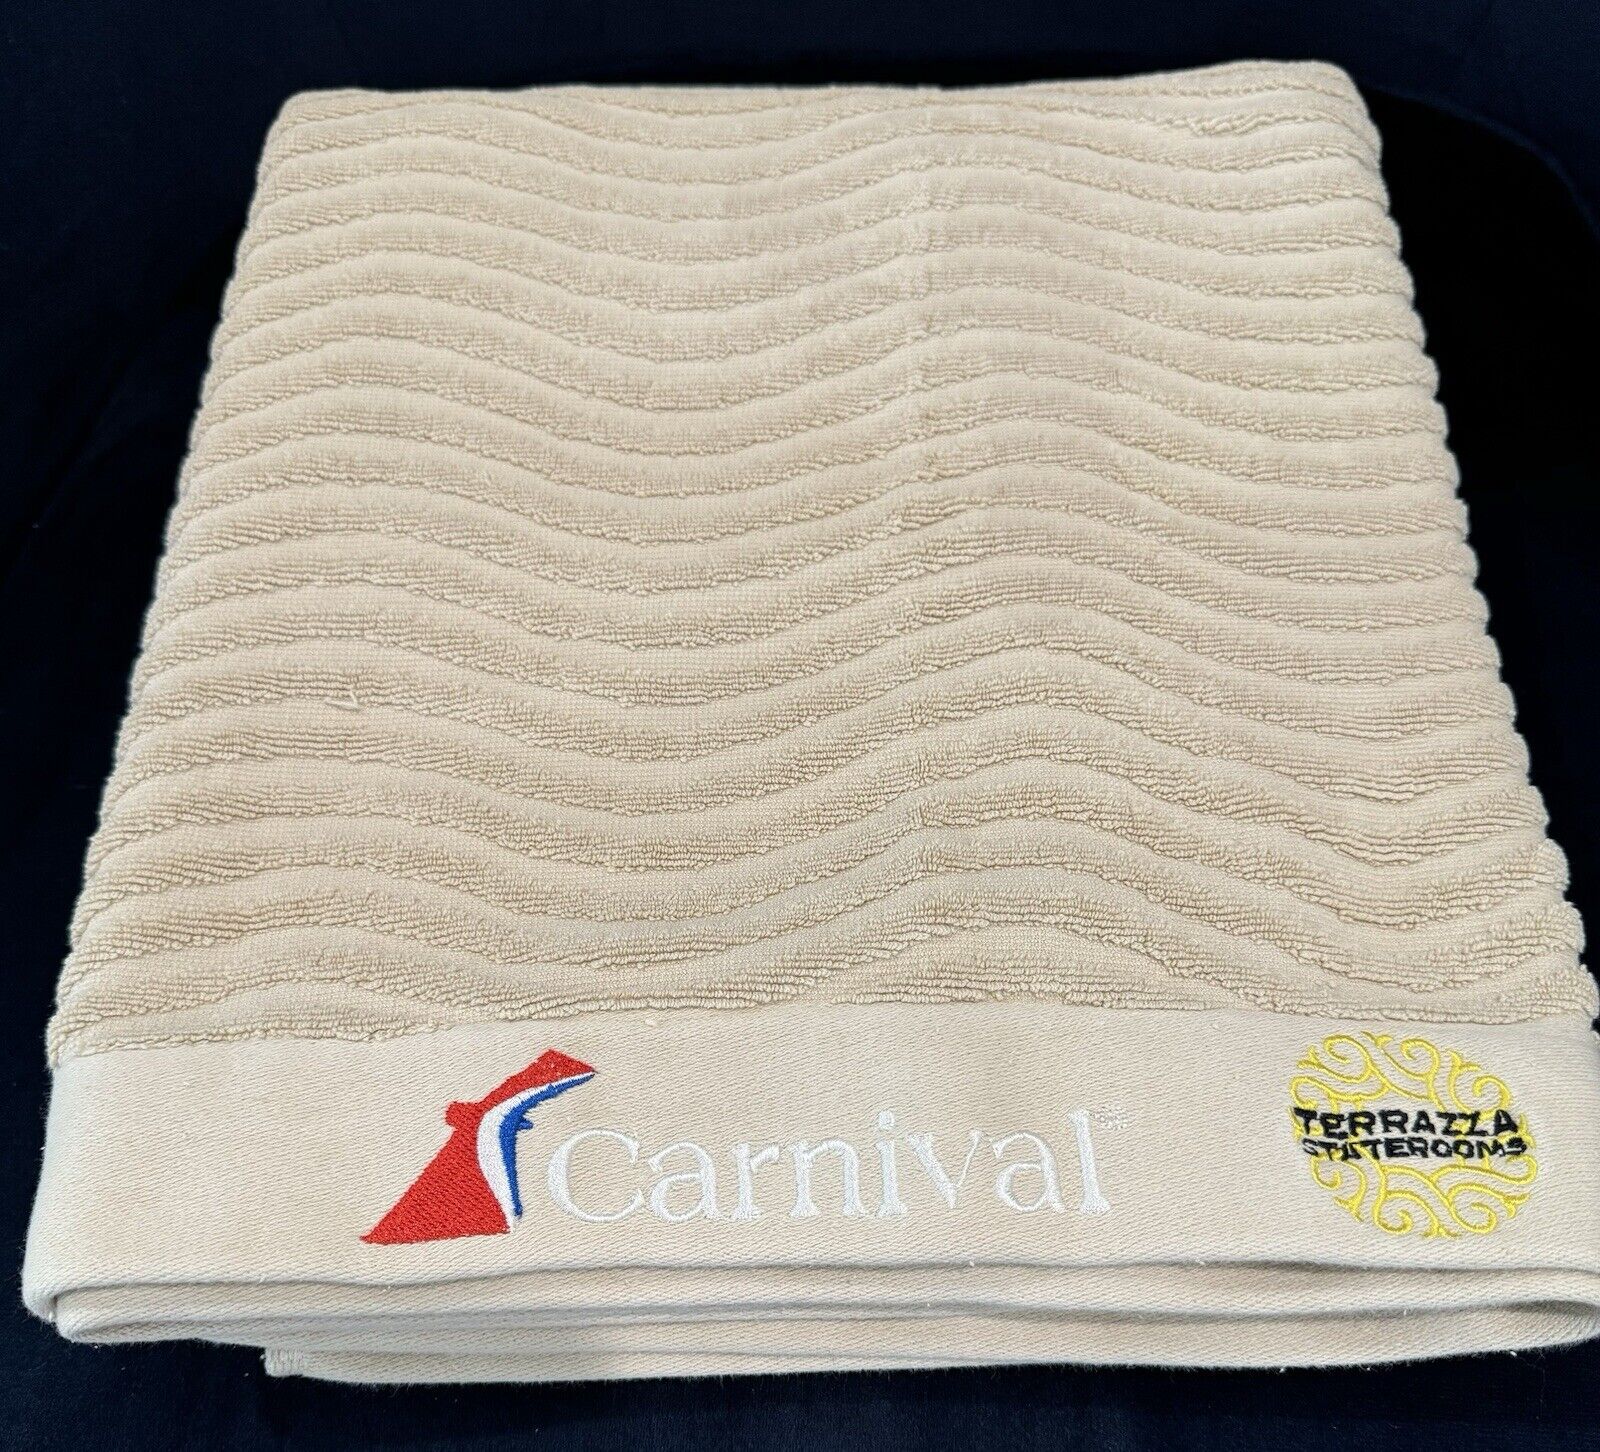 CARNIVAL CRUISE SHIP - RARE Tan Beach Towel with Terrazza Logo 64